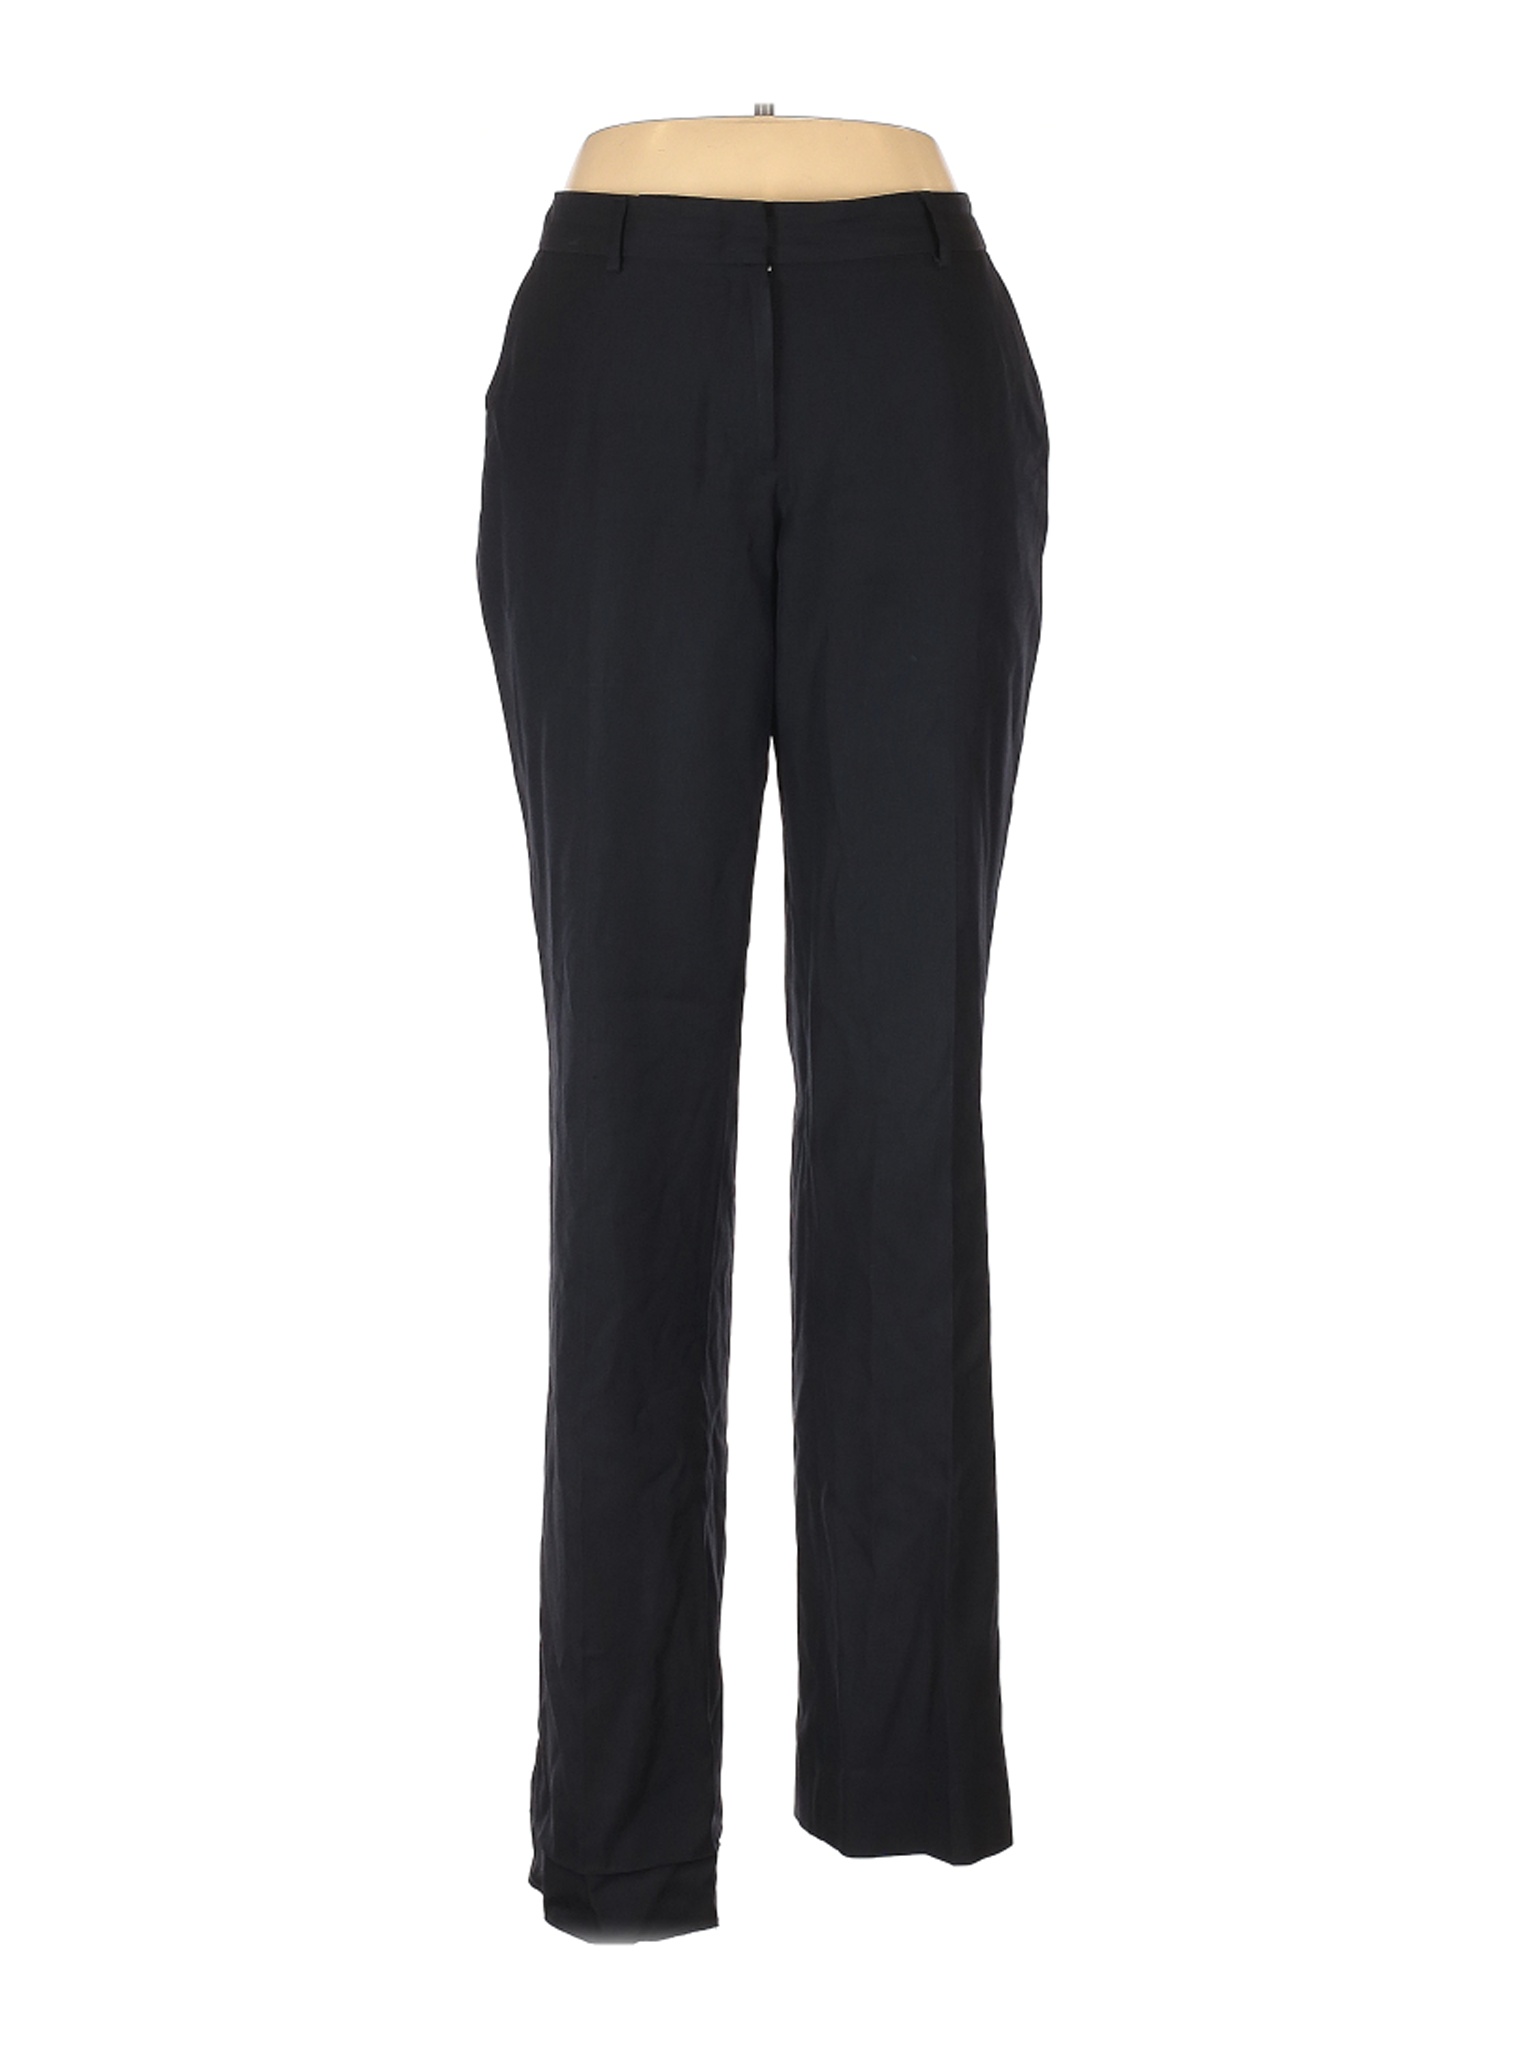 Cintas Women Black Casual Pants 10 | eBay